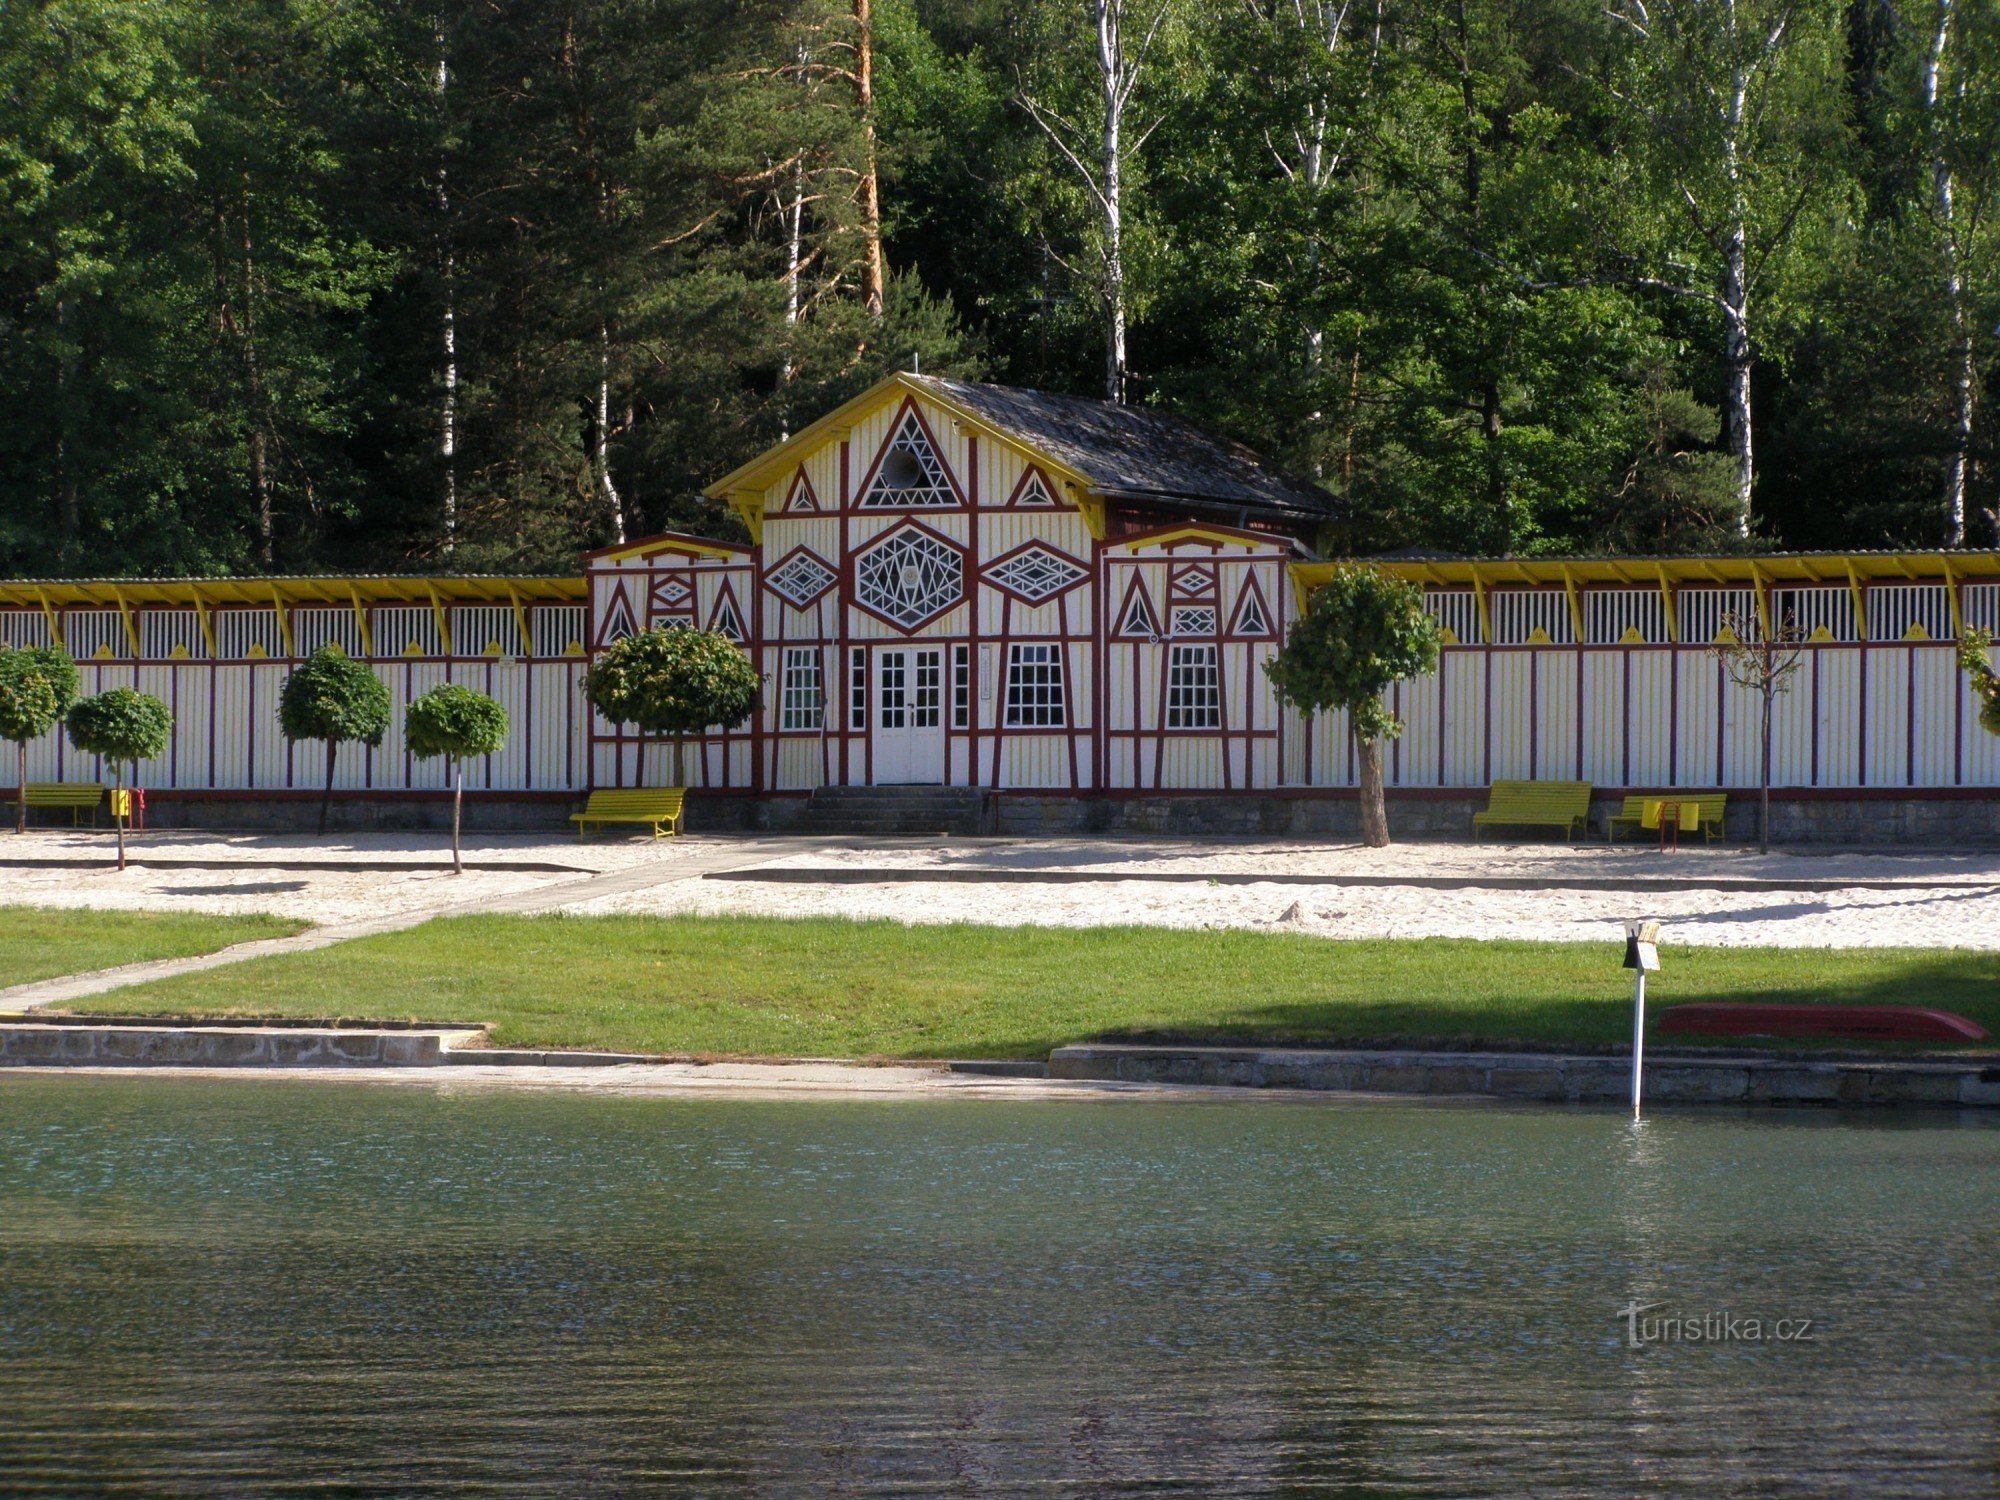 Hořice - Dachova swimmingpool